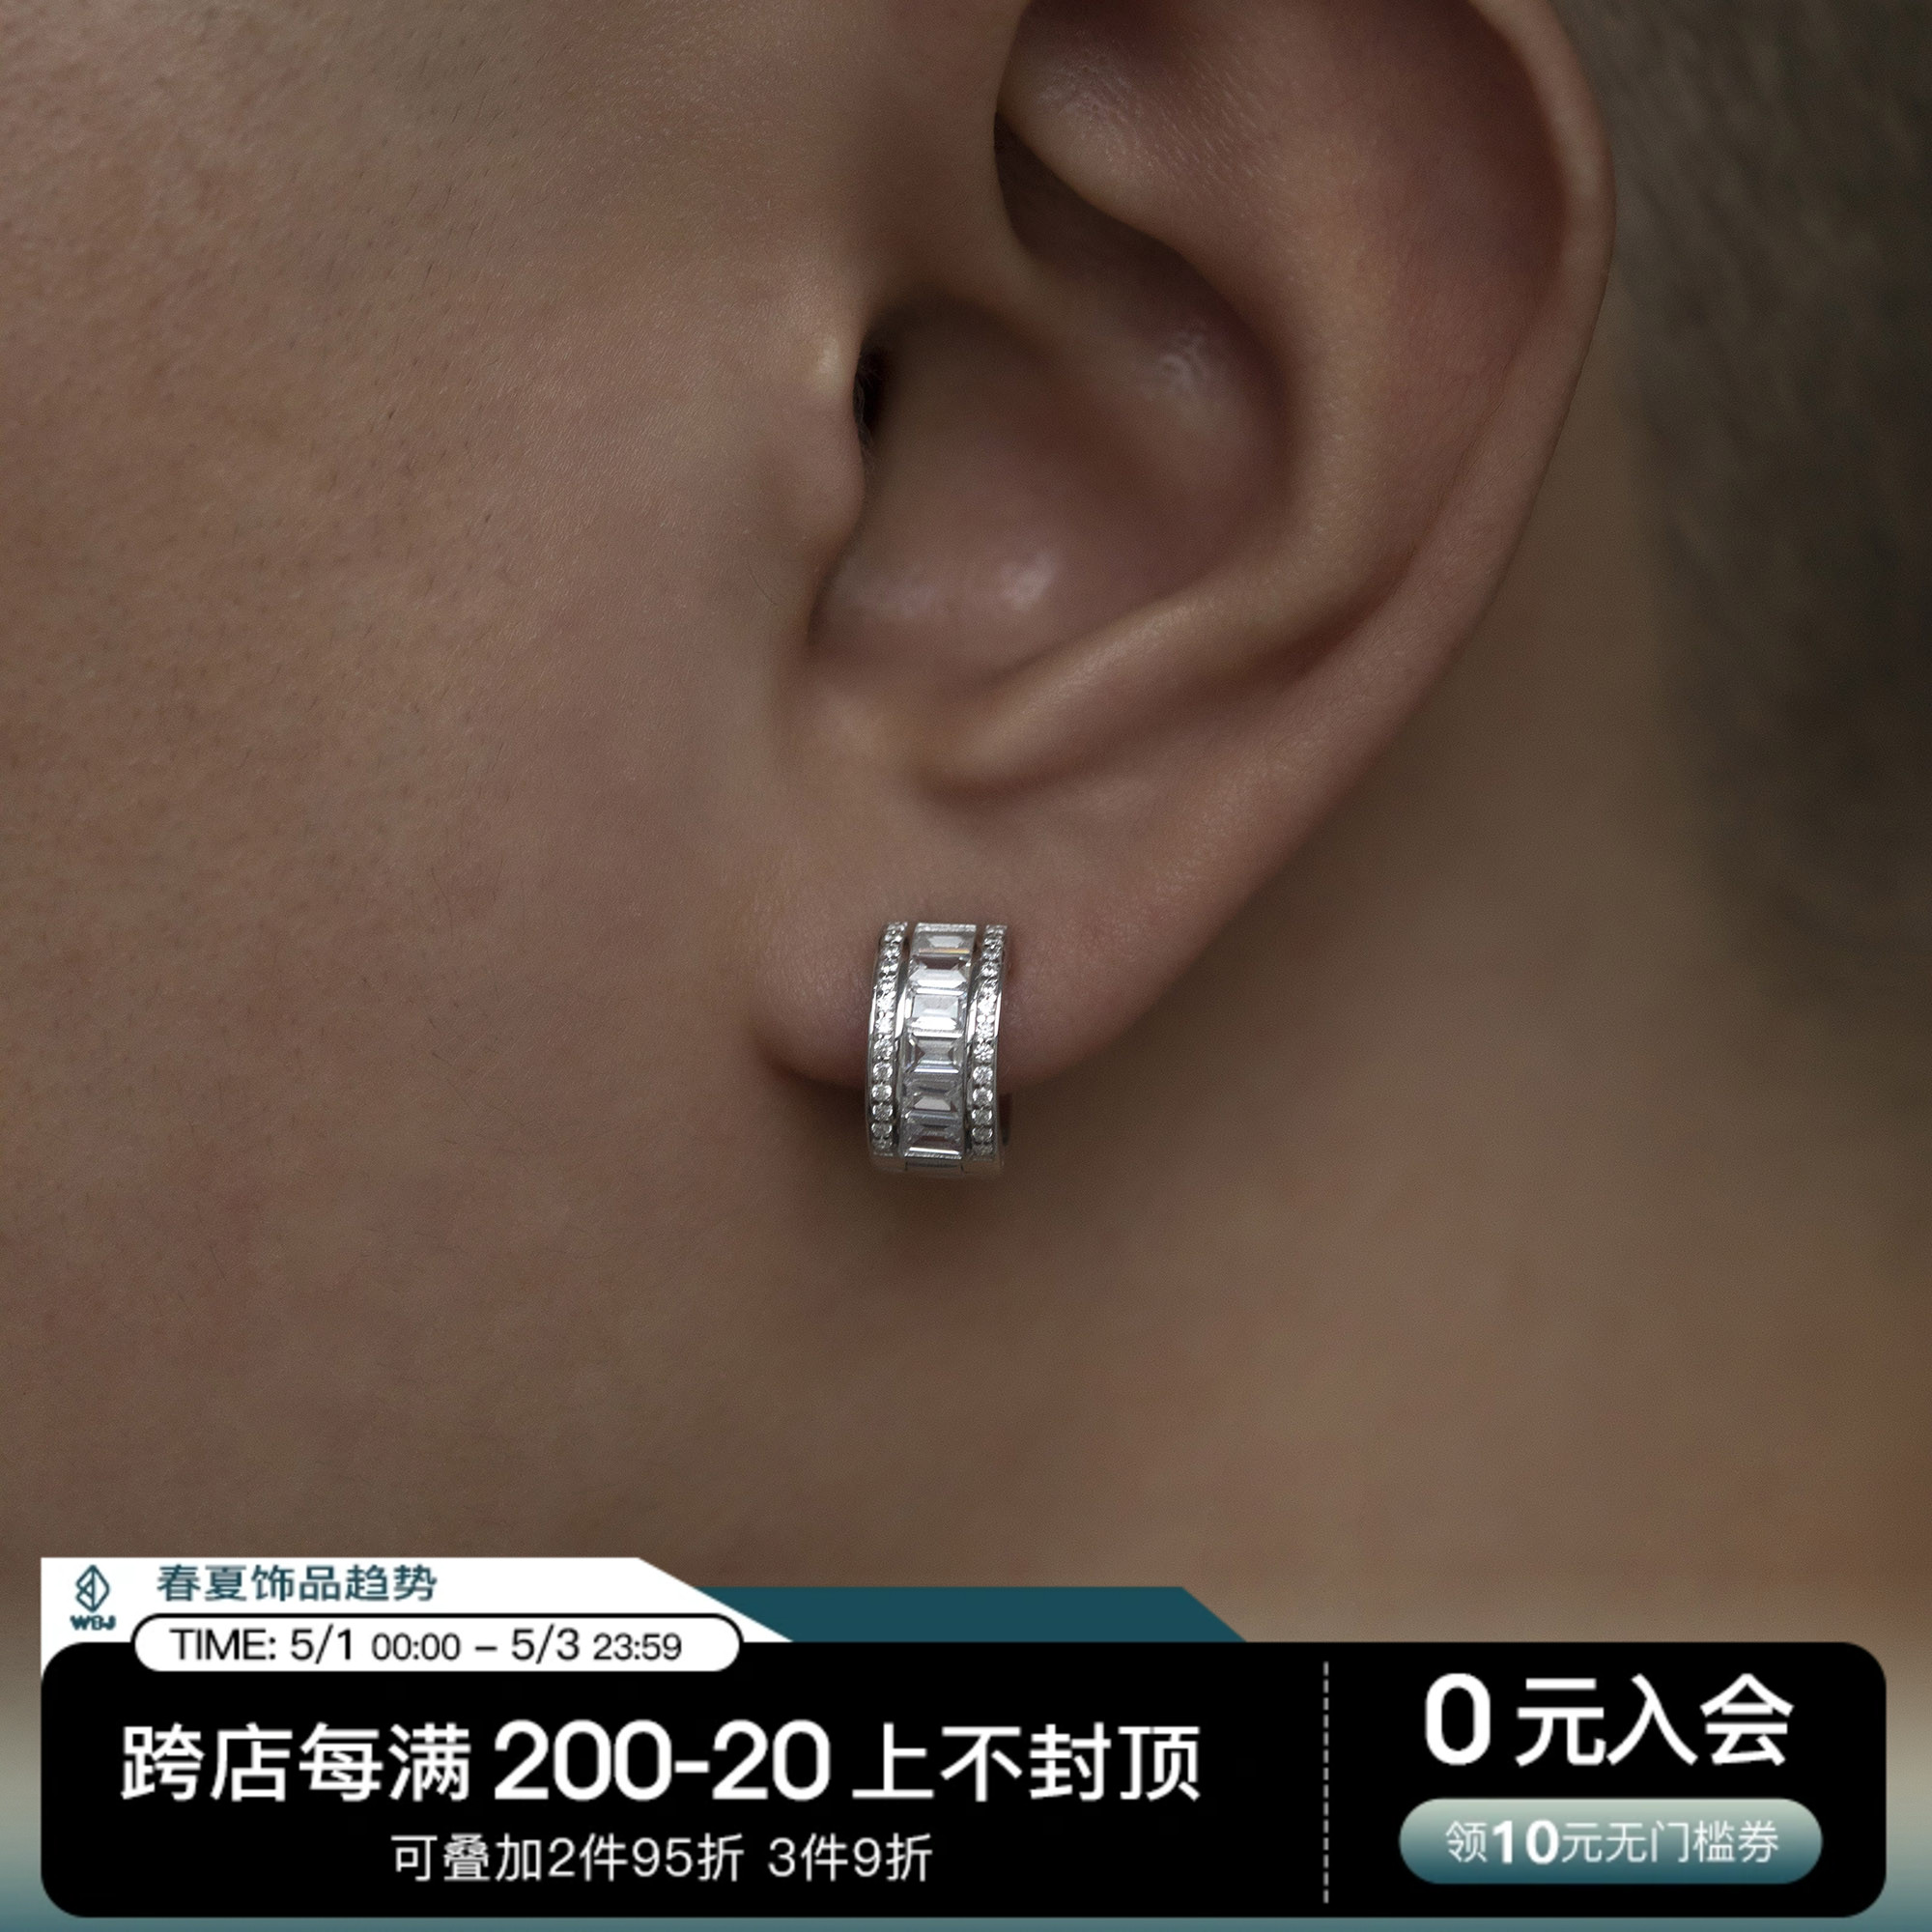 WBJ定制珠宝T方耳环S925银镀金满镶嵌耳环纯银饰品hiphop earring